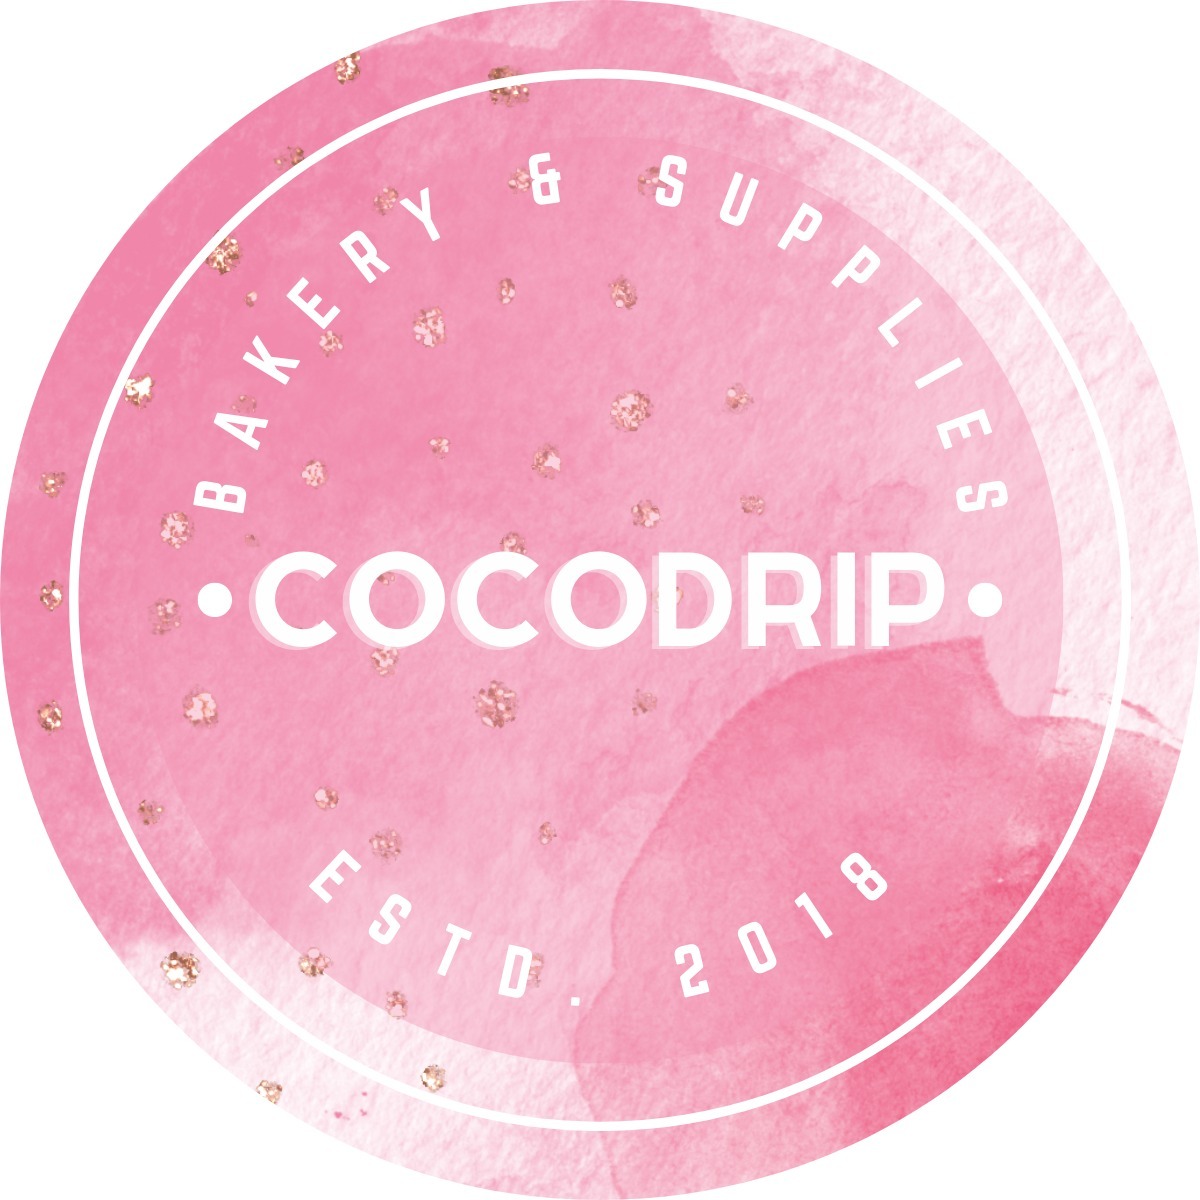 Cocodrip logo